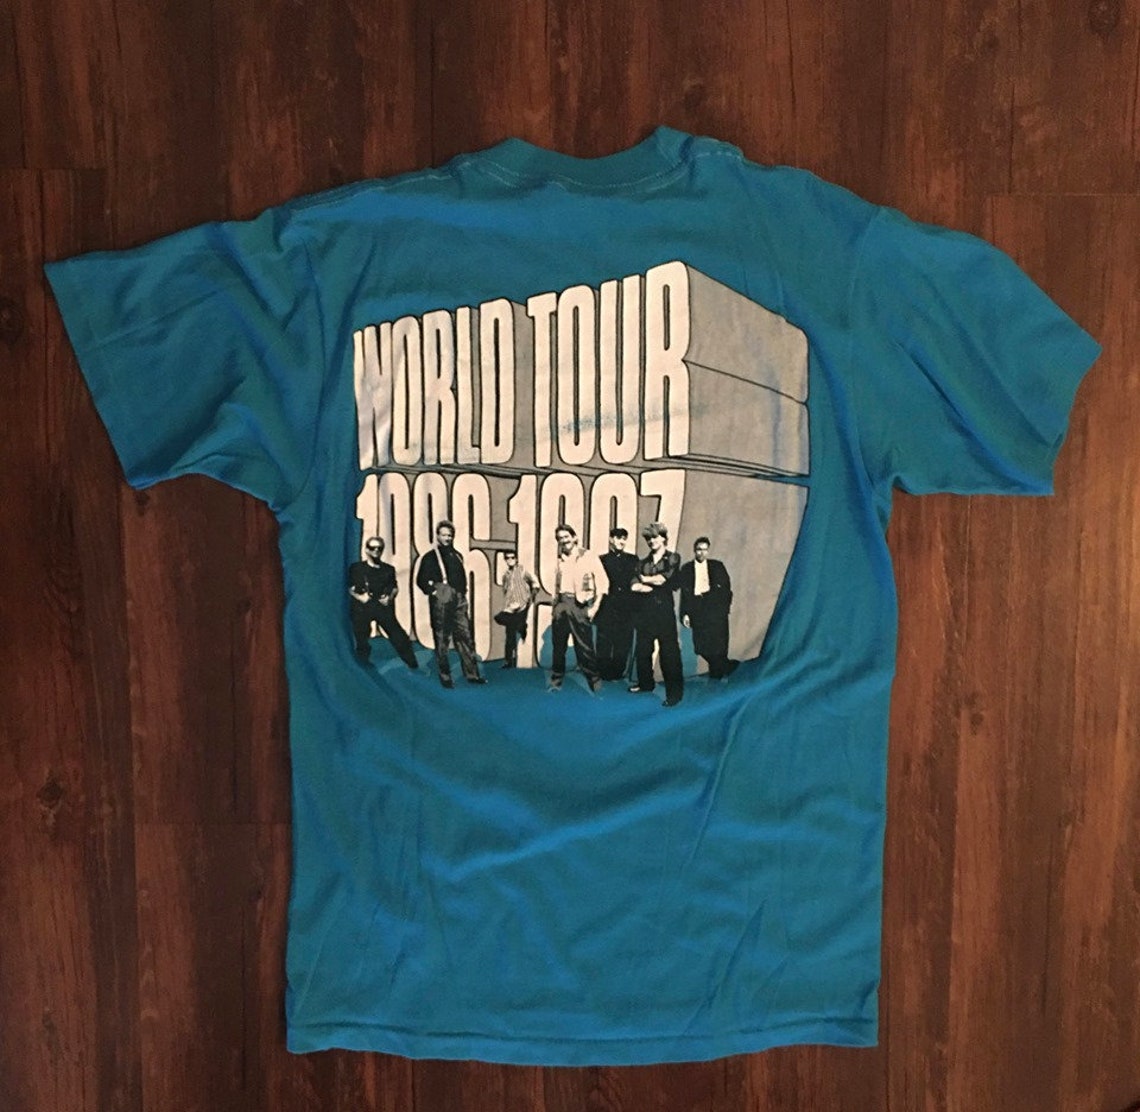 band world tour t shirt